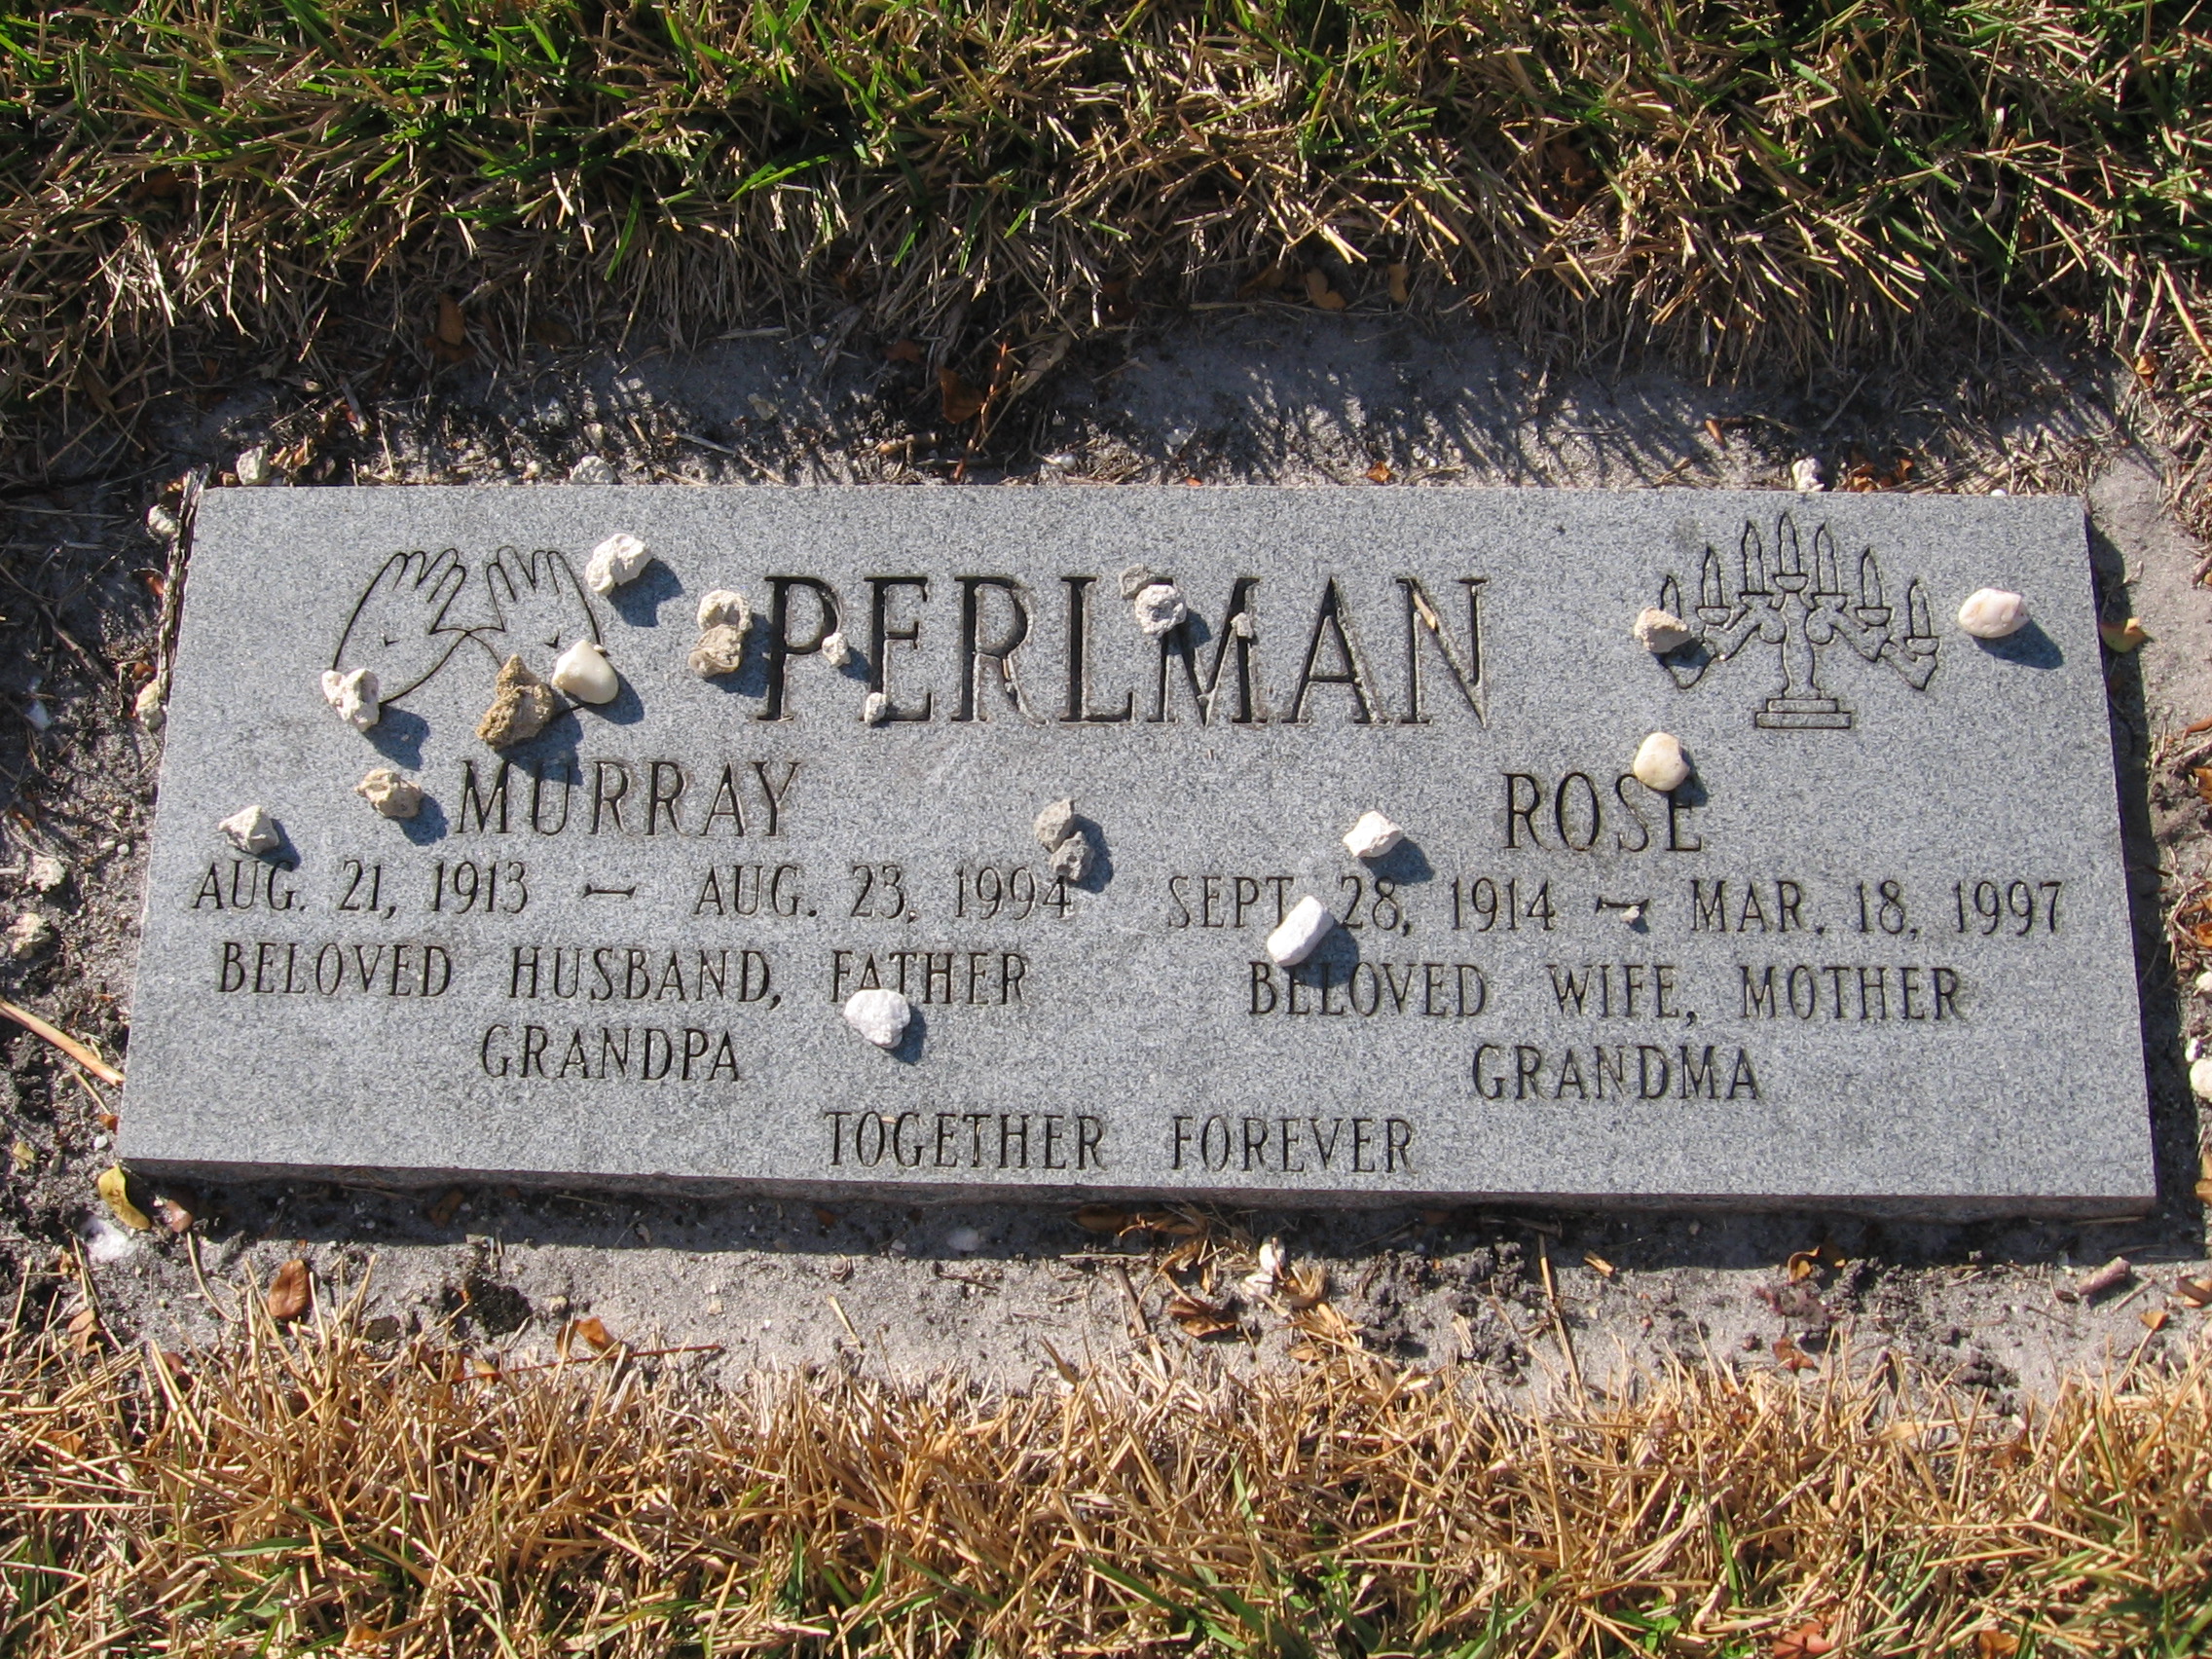 Rose Perlman